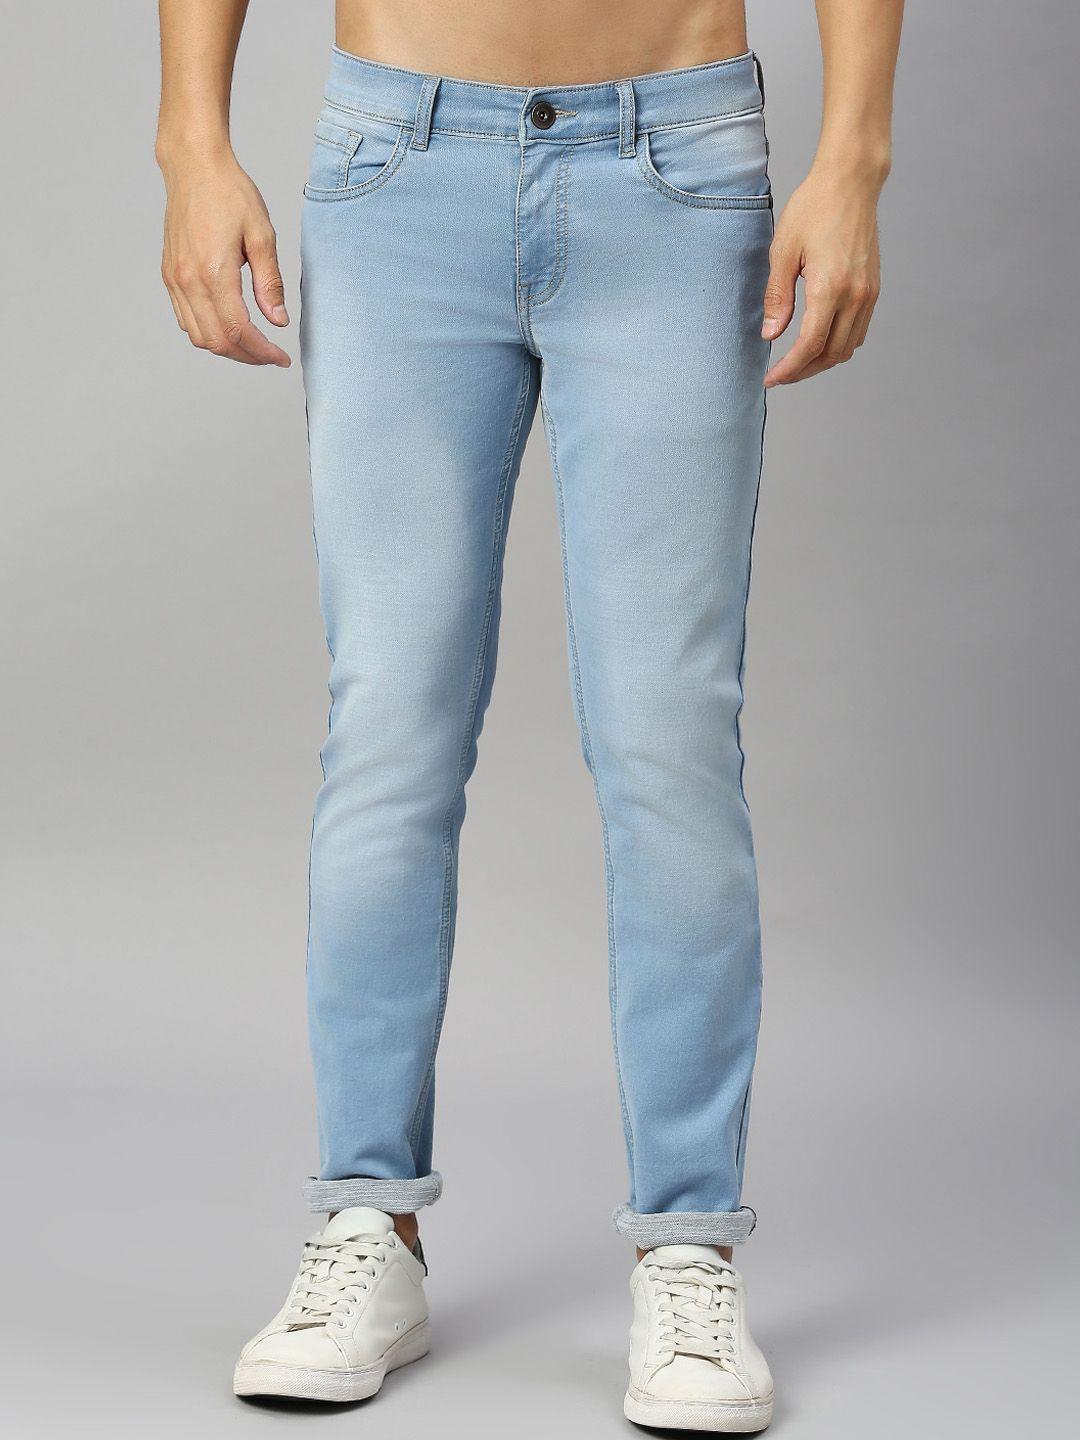 kook n keech men slim fit low-rise heavy fade comfort stretchable jeans